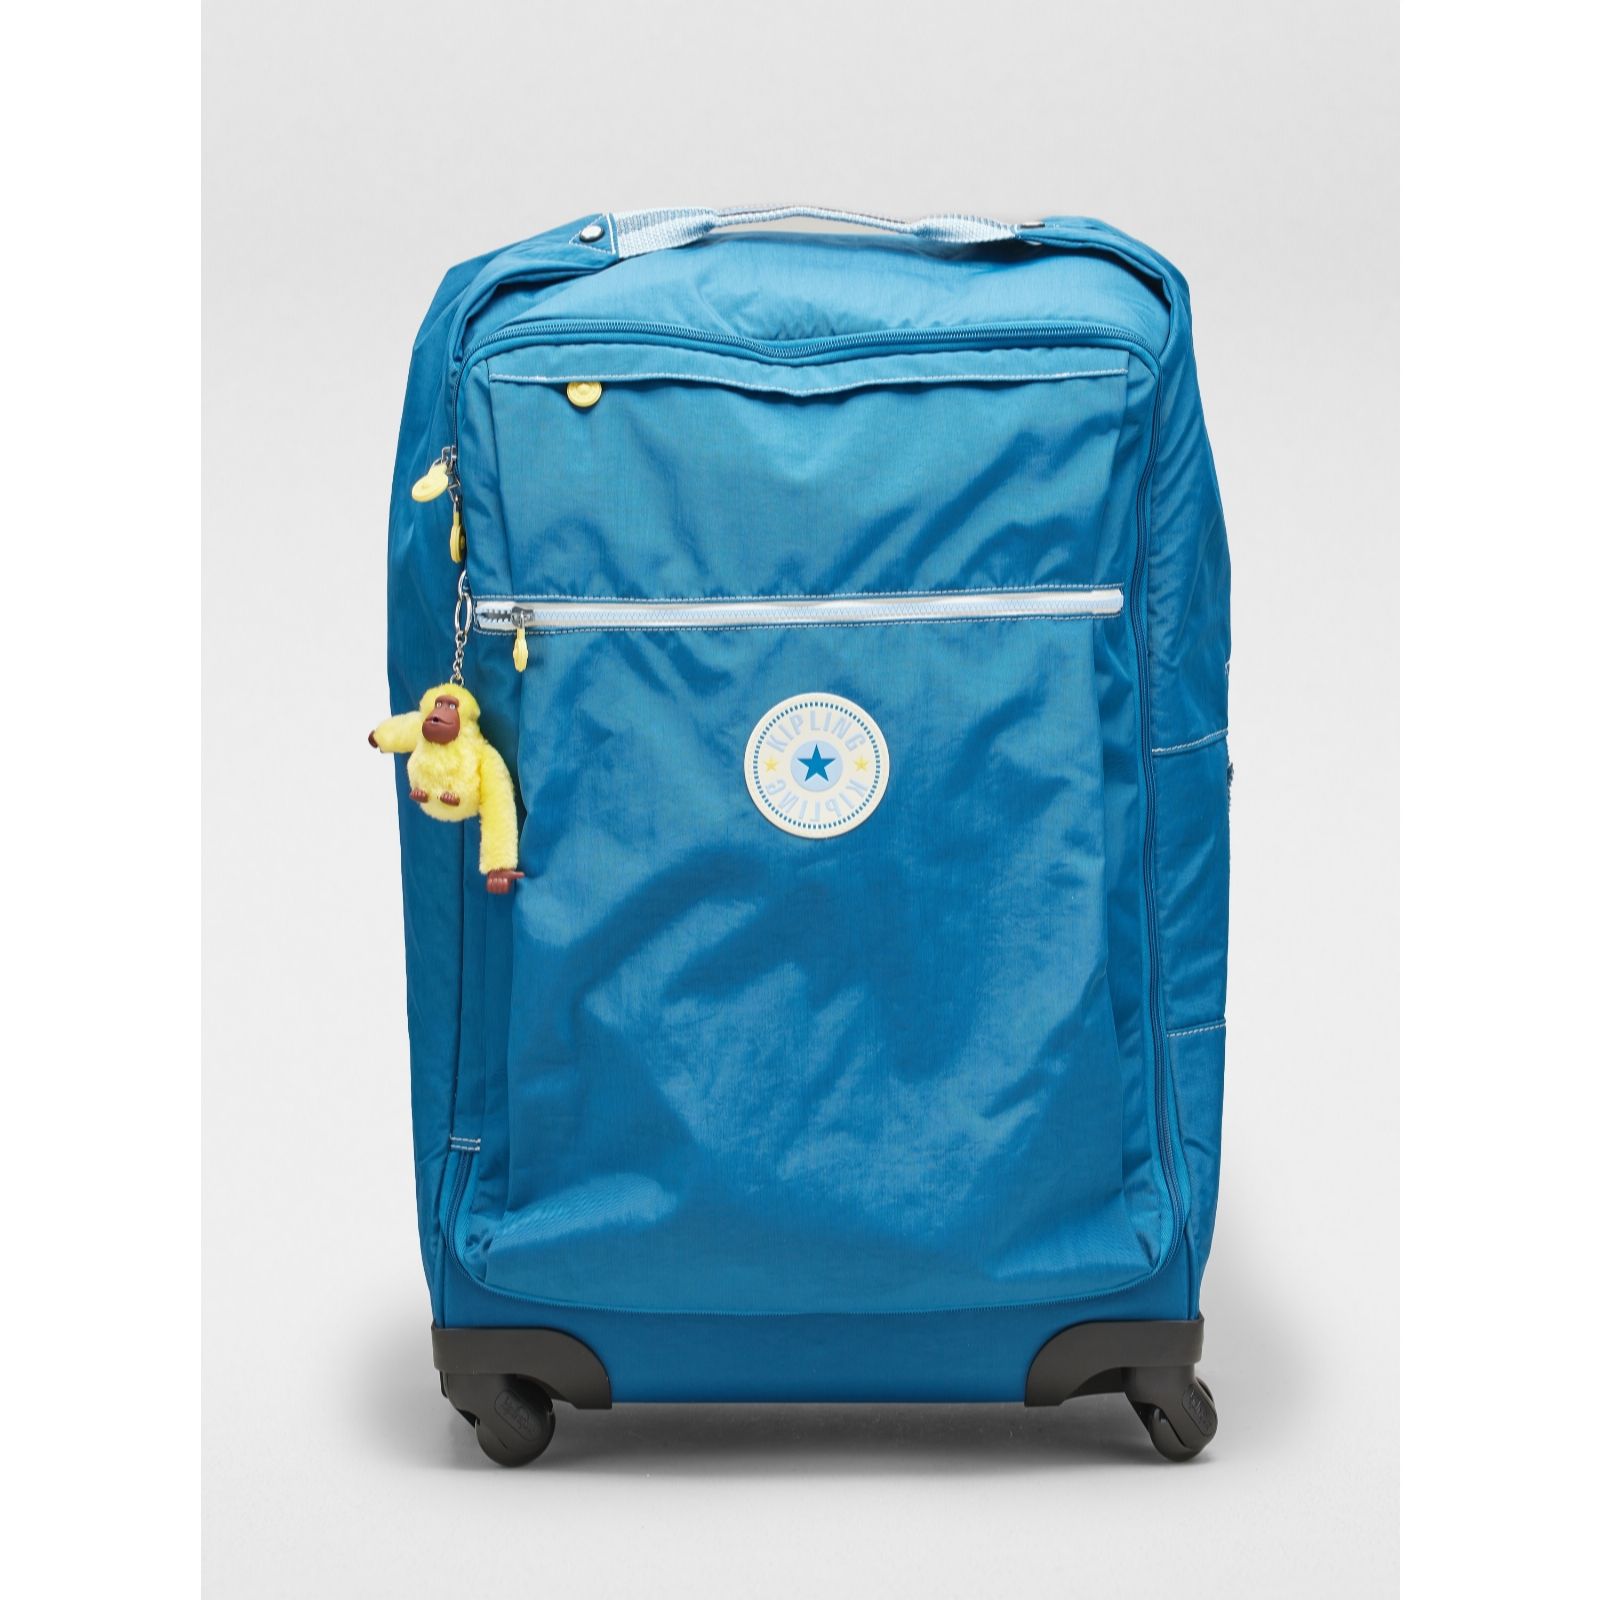 Kipling Darcey Medium Spinner Suitcase